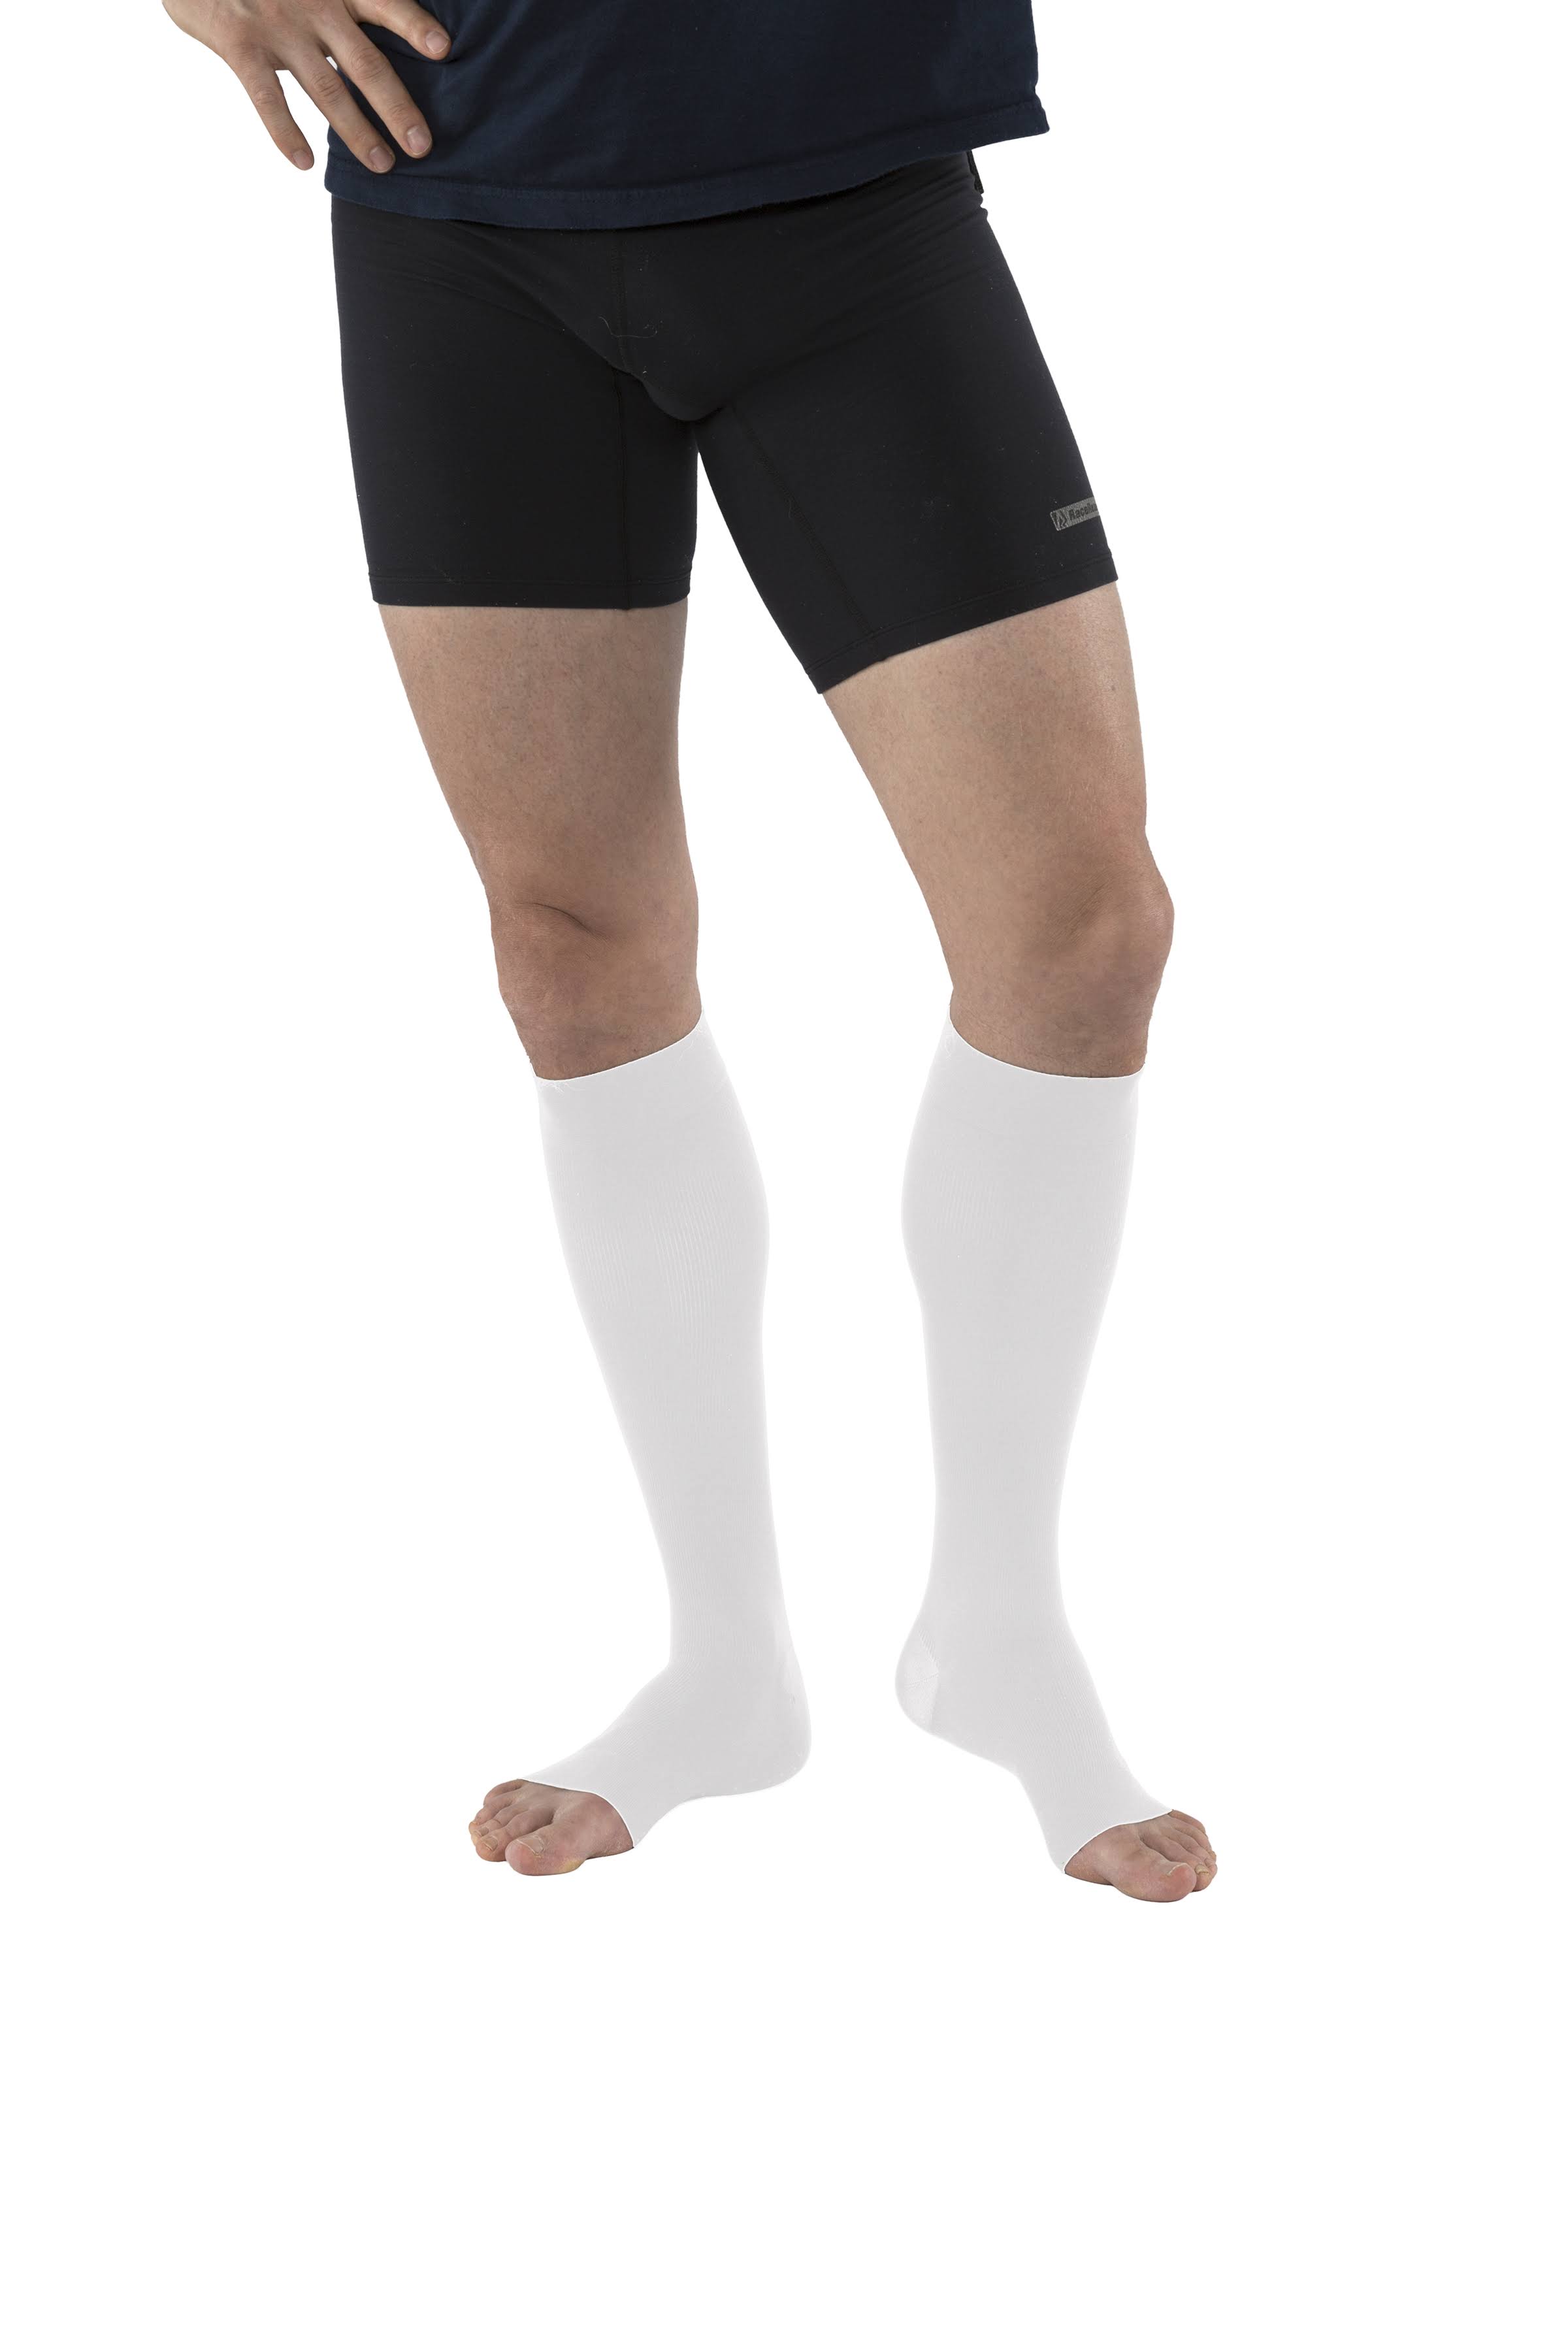 Jobst Thigh High Men's Closed Toe Socks - 20-30 mmHg, Large, Black